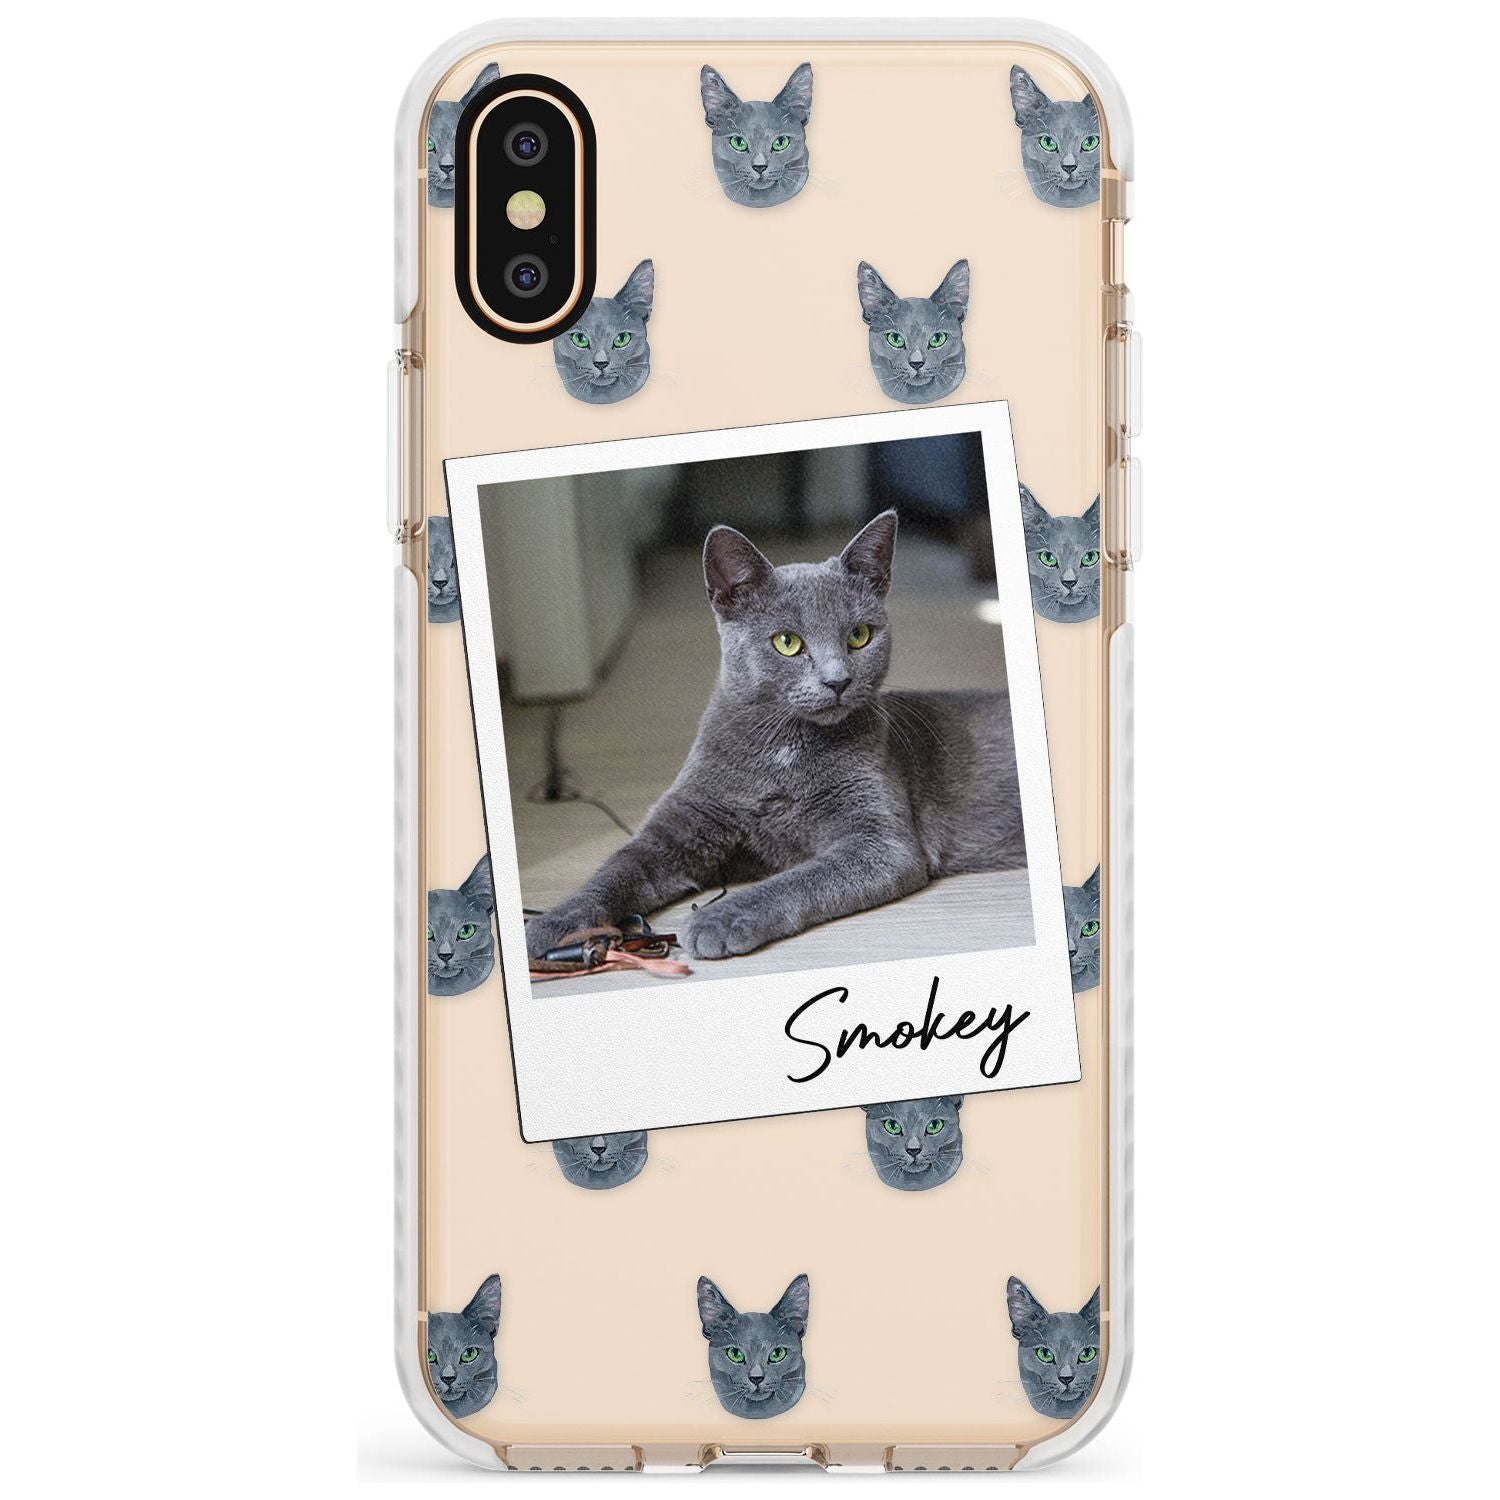 Personalised Korat Cat Photo Impact Phone Case for iPhone X XS Max XR